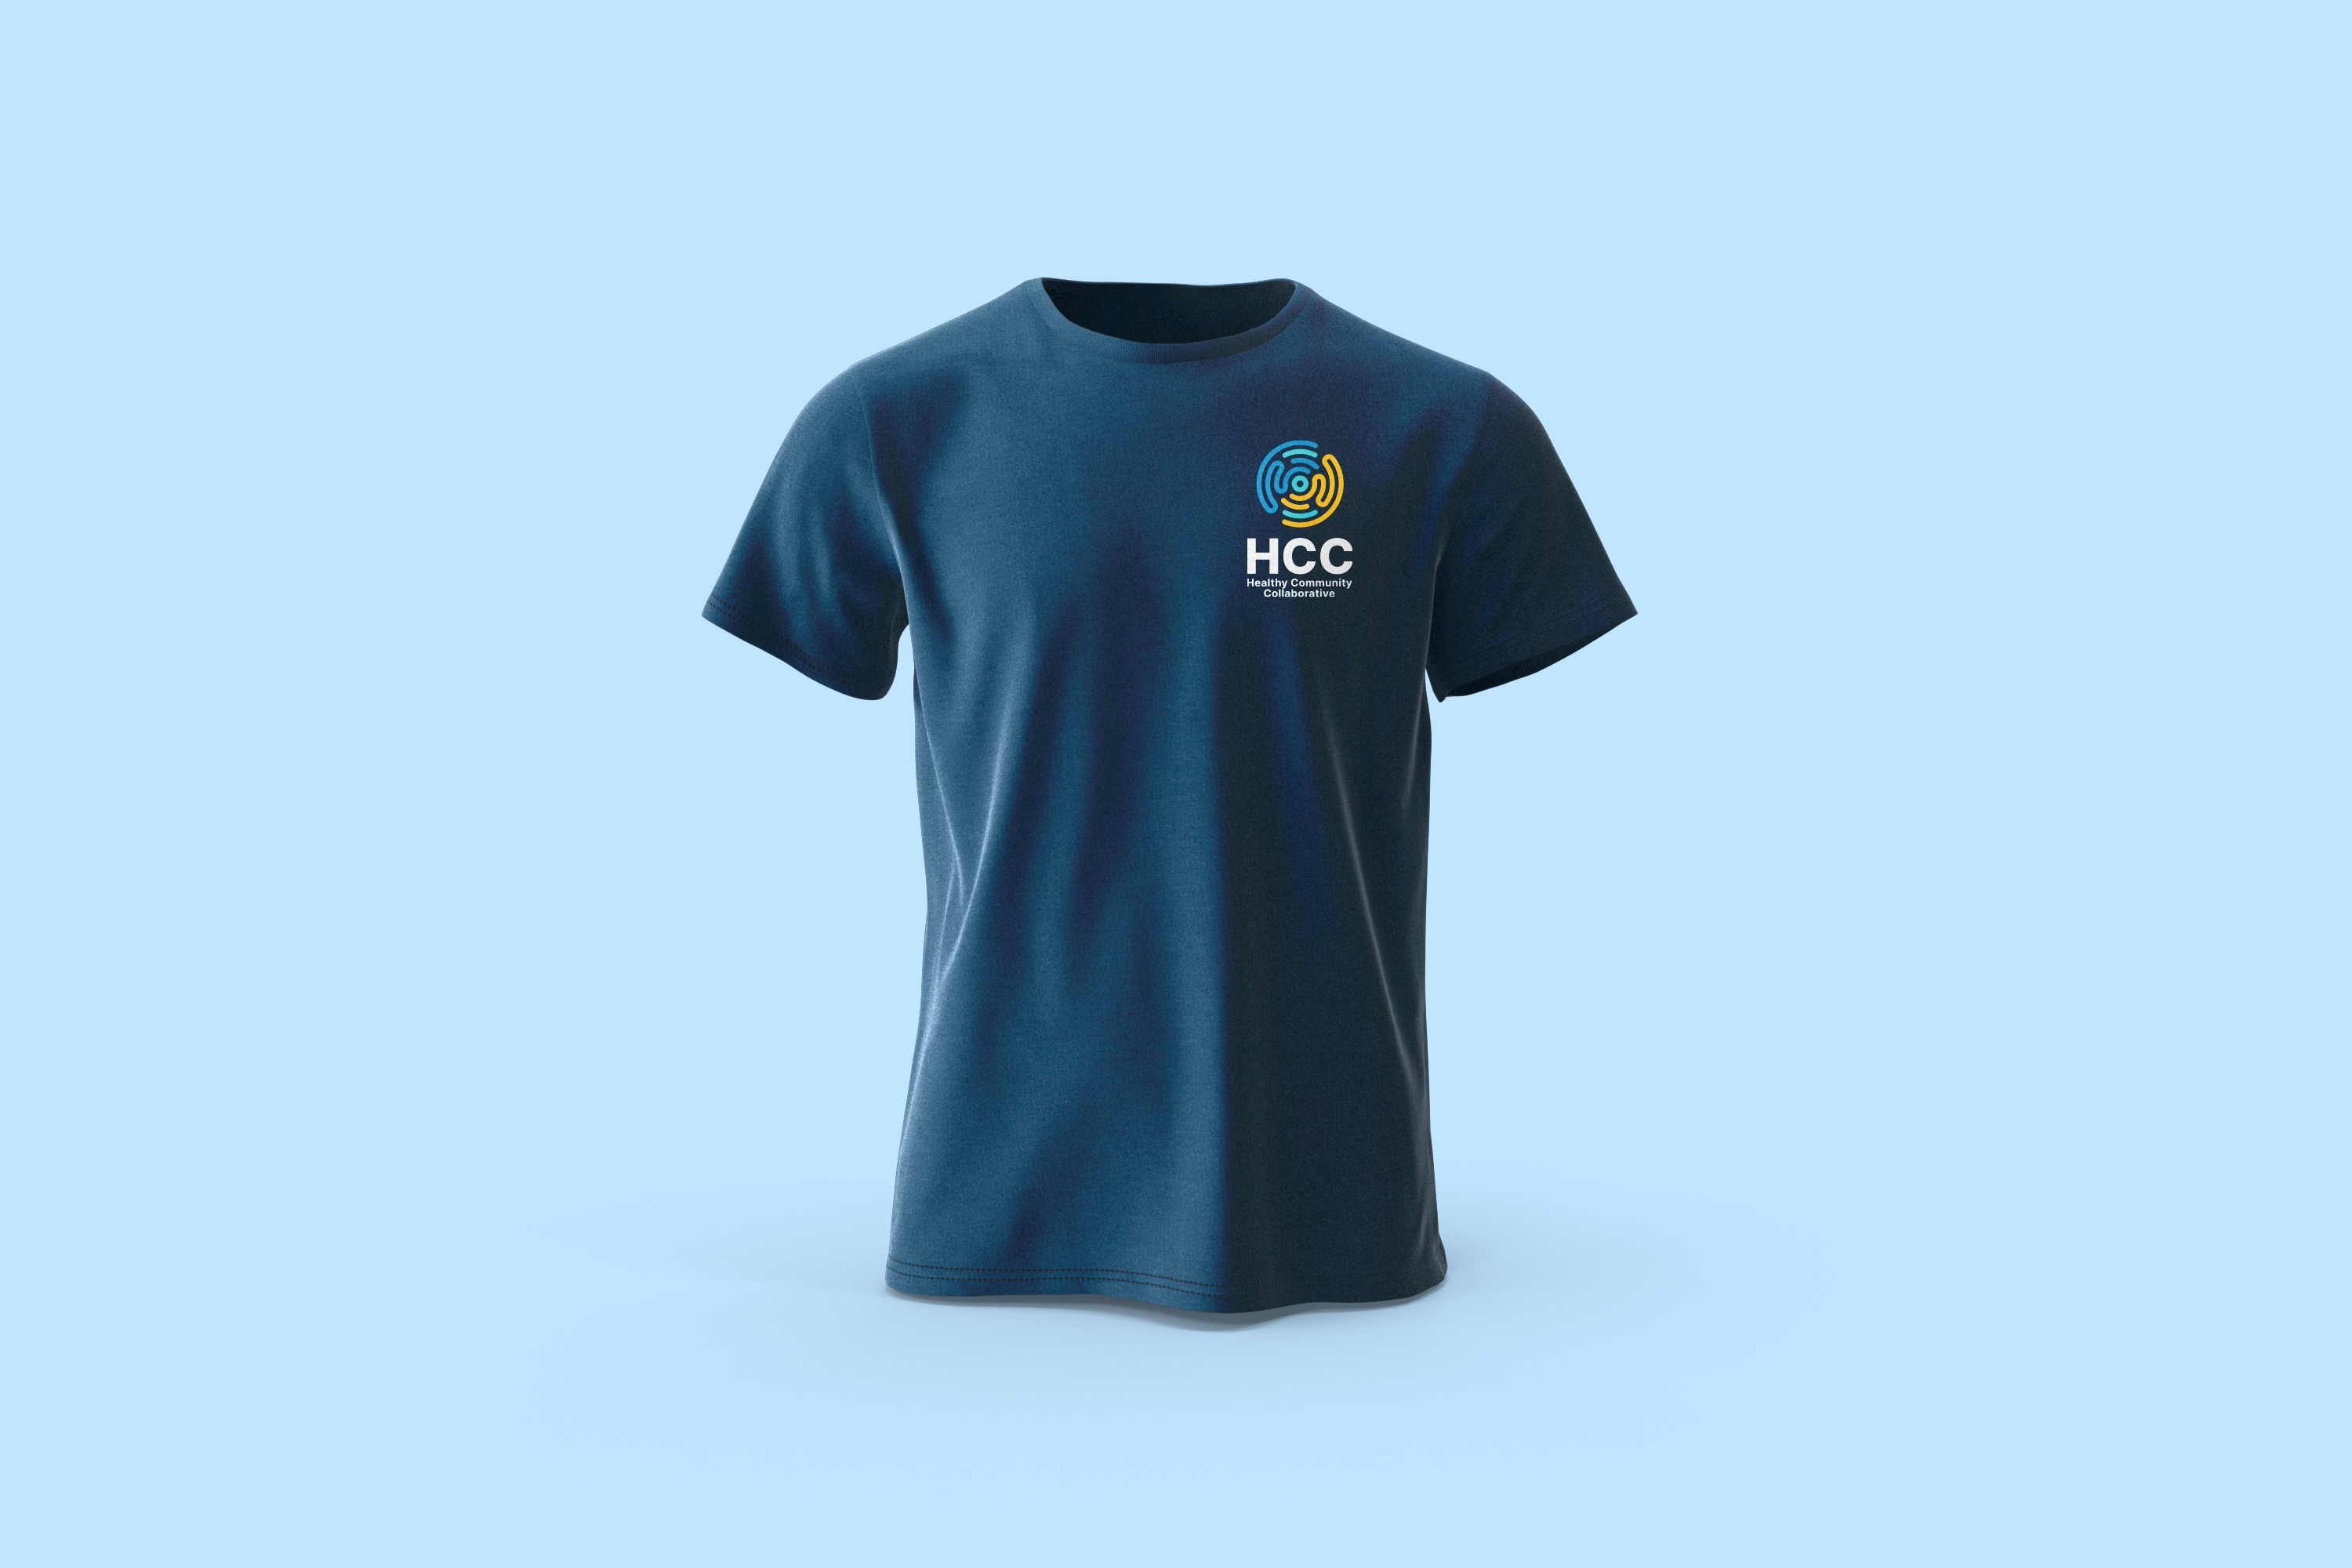 HCC T-shirt Design